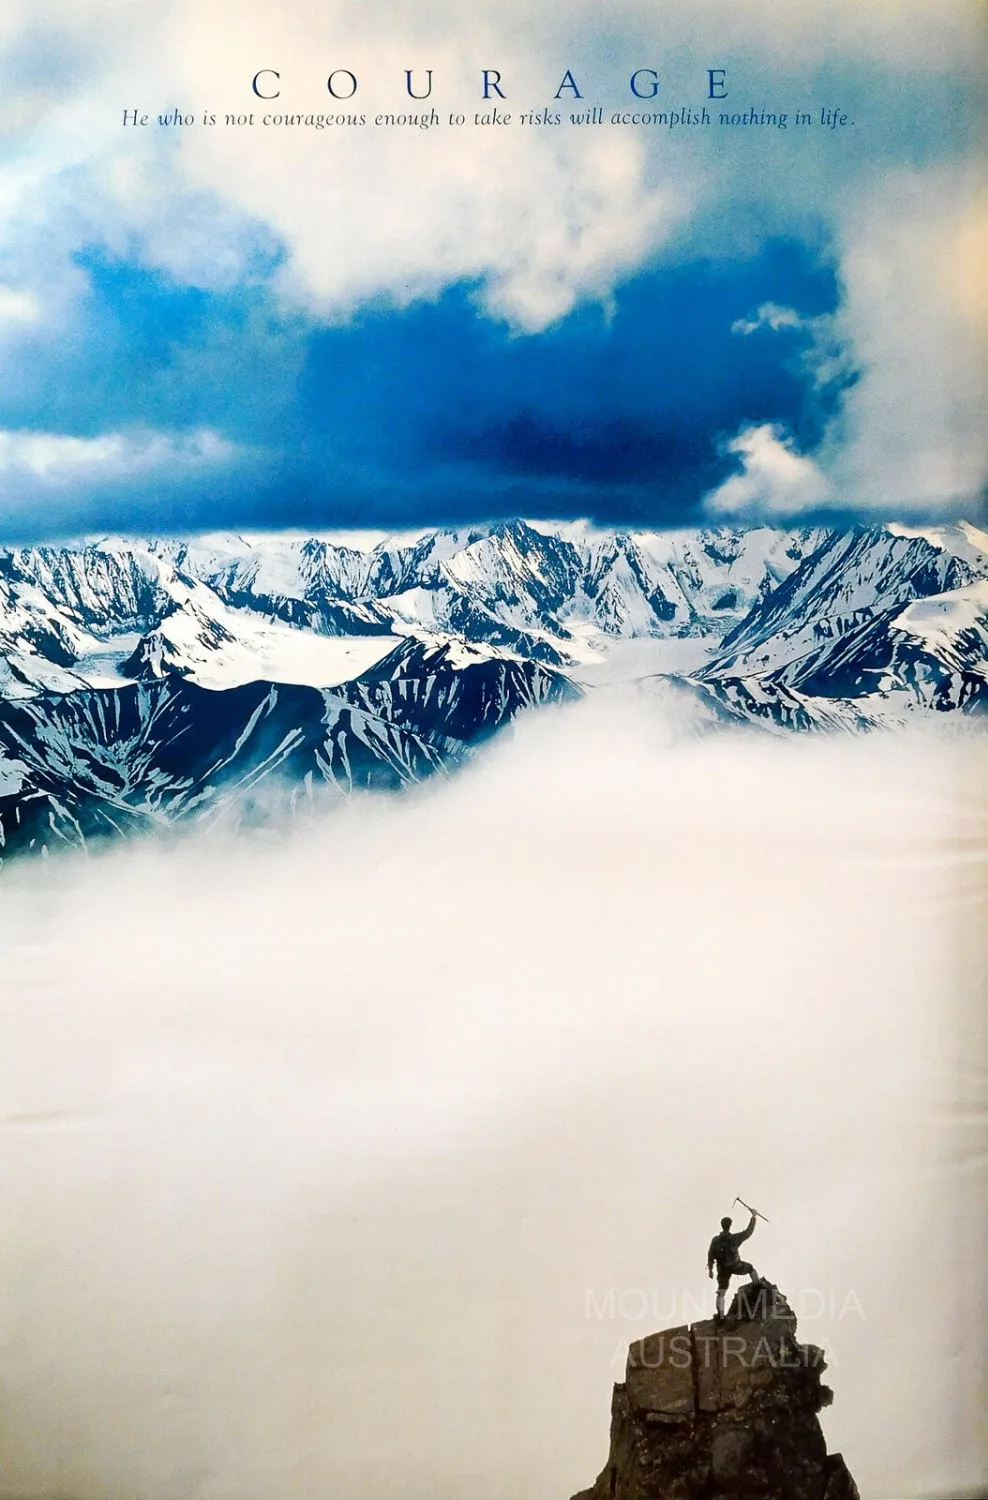 Фото Мужество-альпинизм мотивационные шелк постер декоративная стена краска 24x36inch |